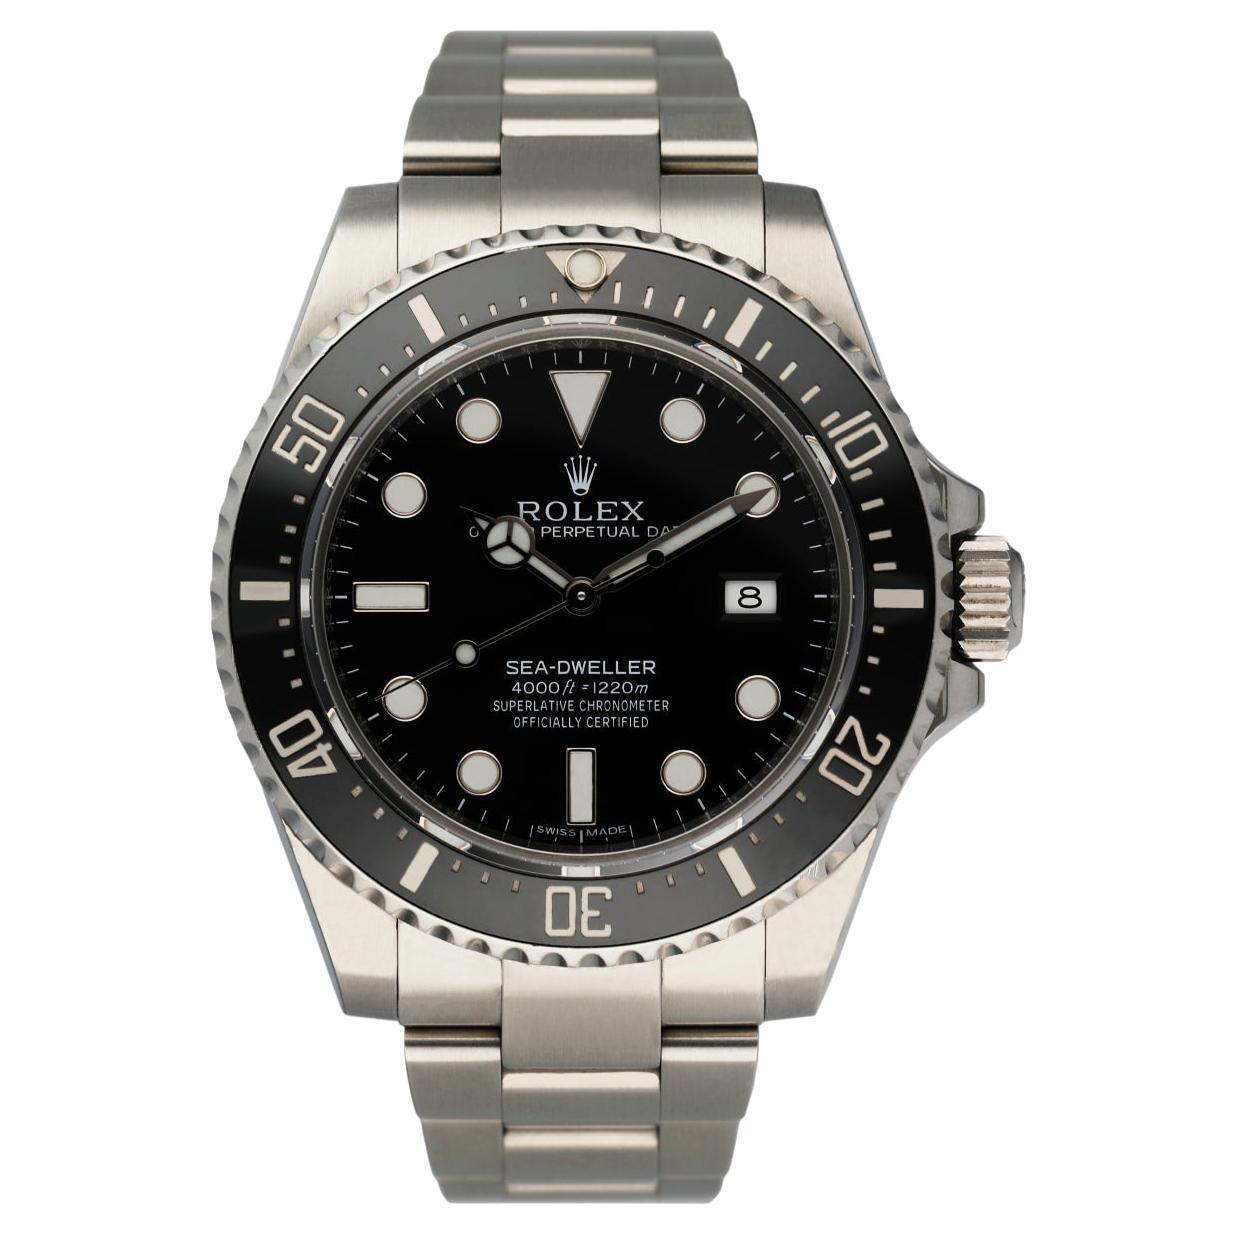 Rolex Sea-Dweller 116600 Men's Watch